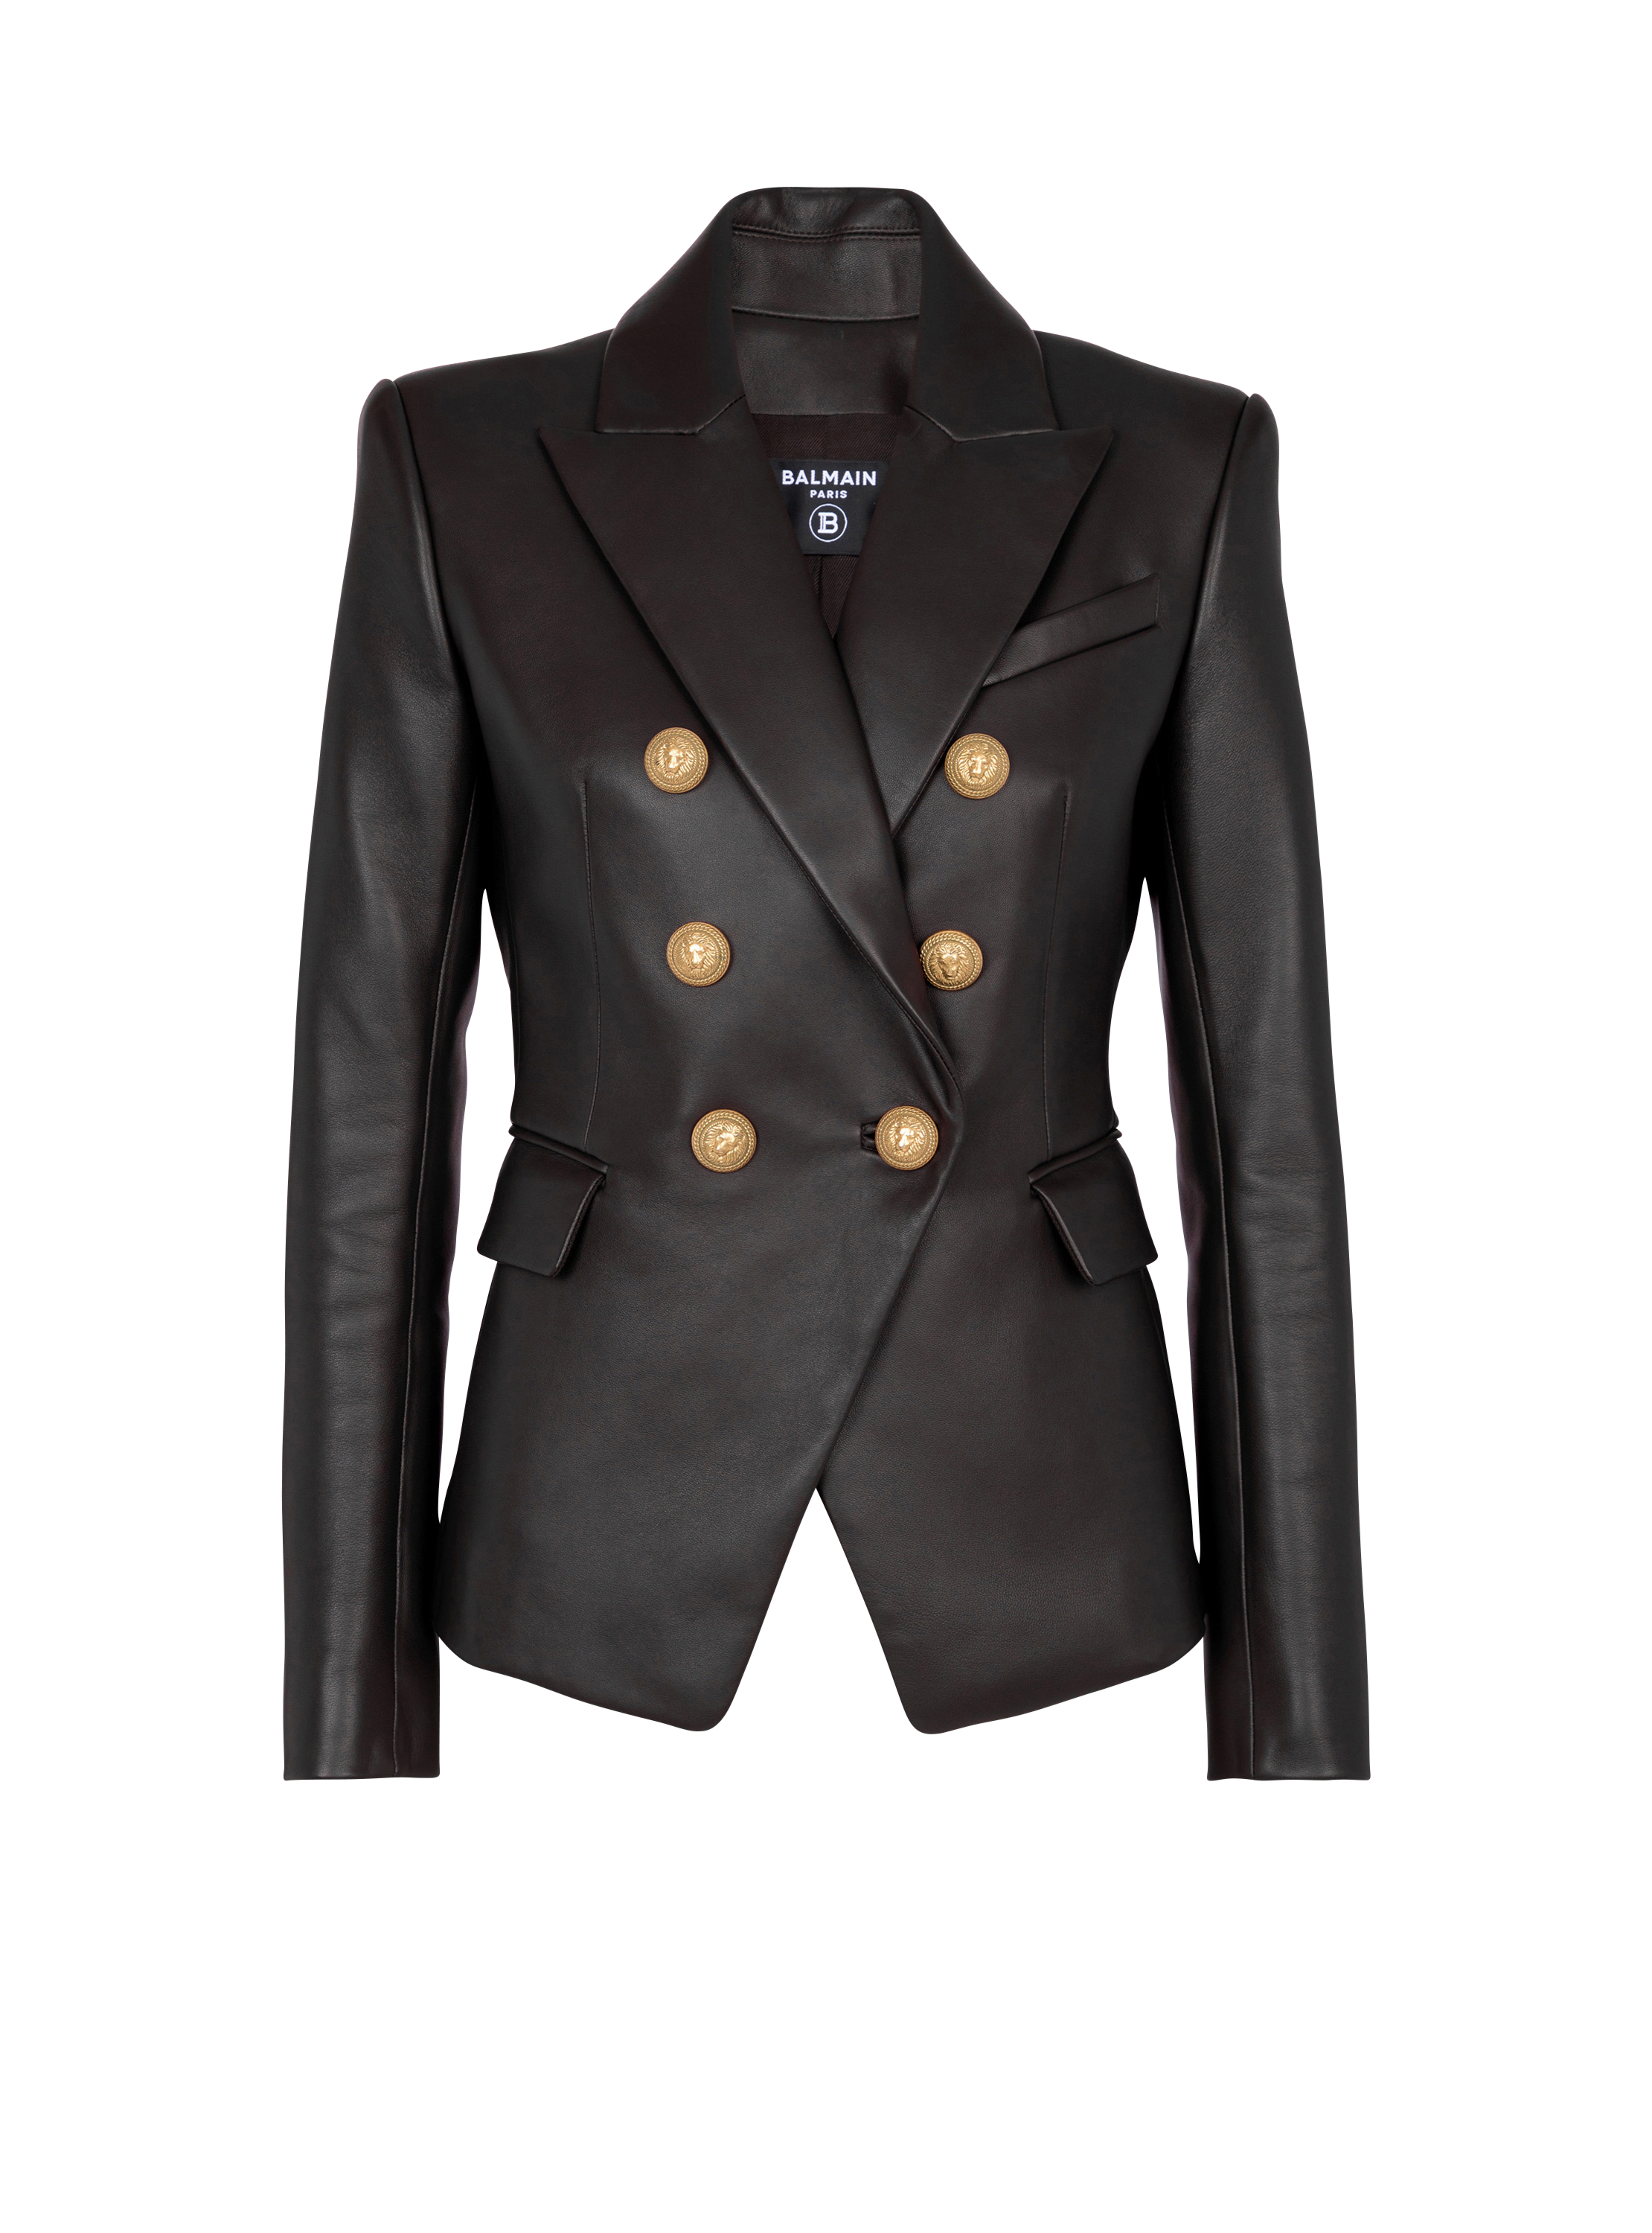 Classic 6-button leather jacket, black, hi-res